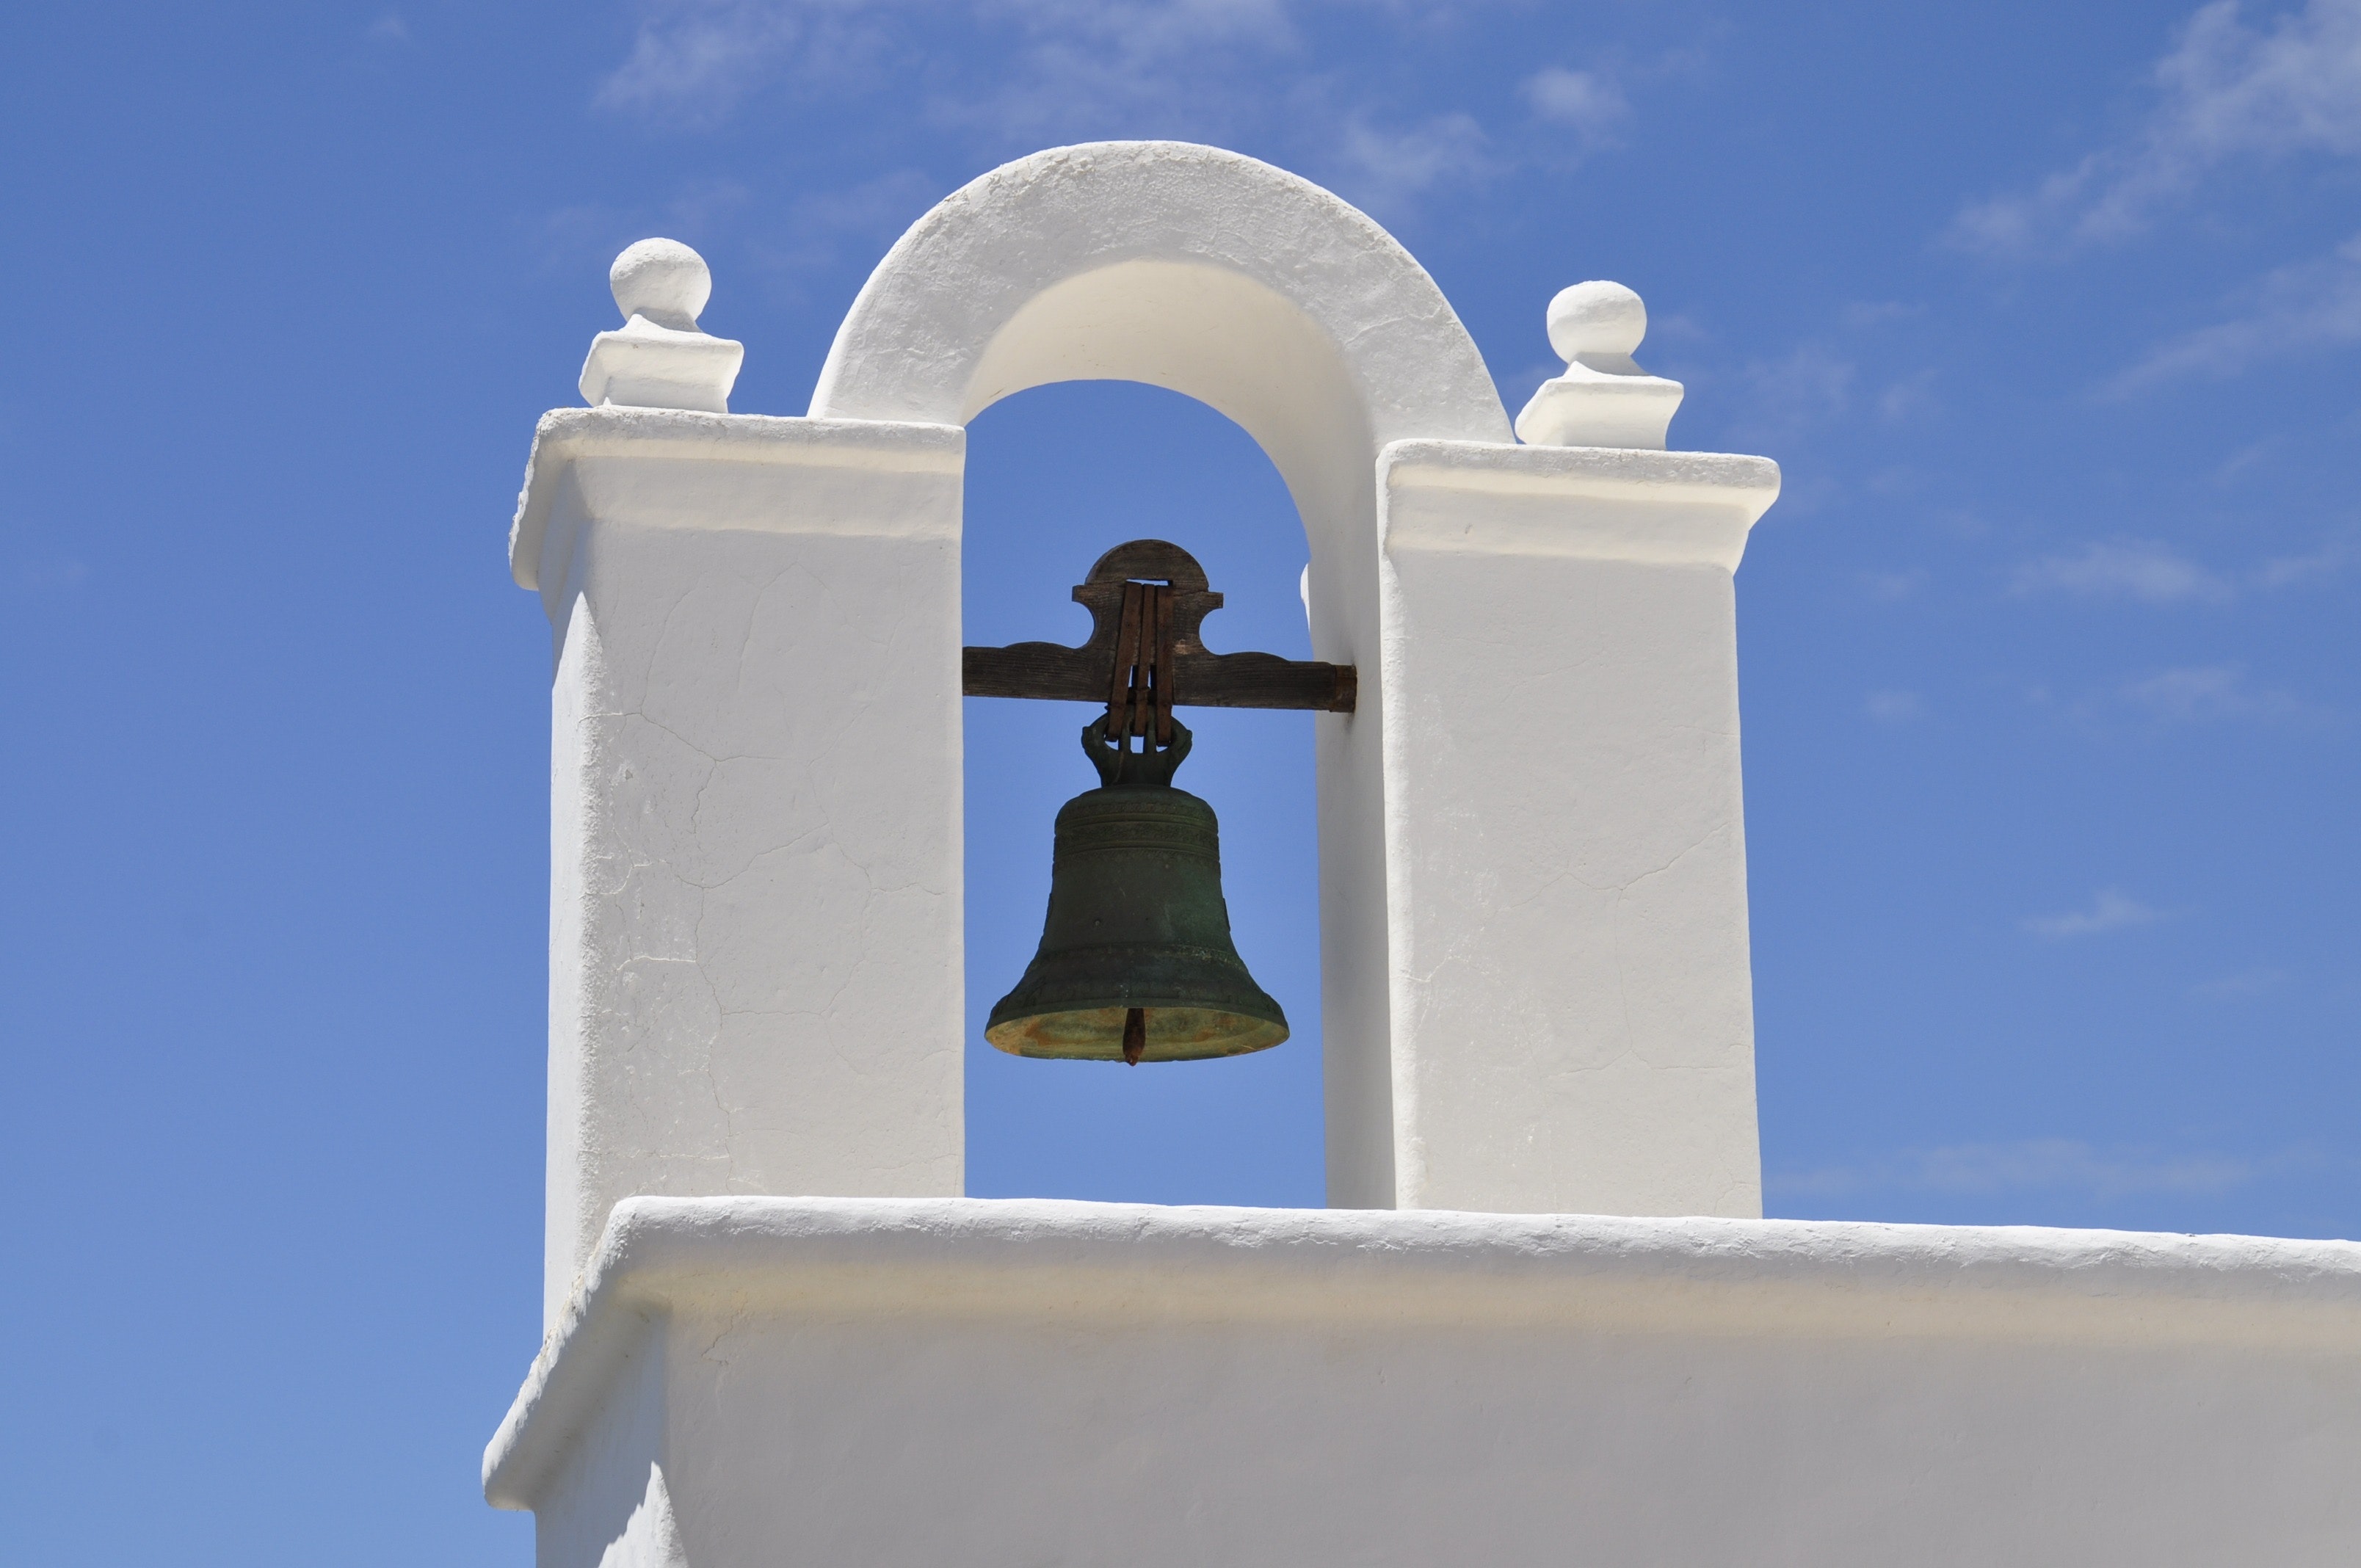 Black bell during daytime photo